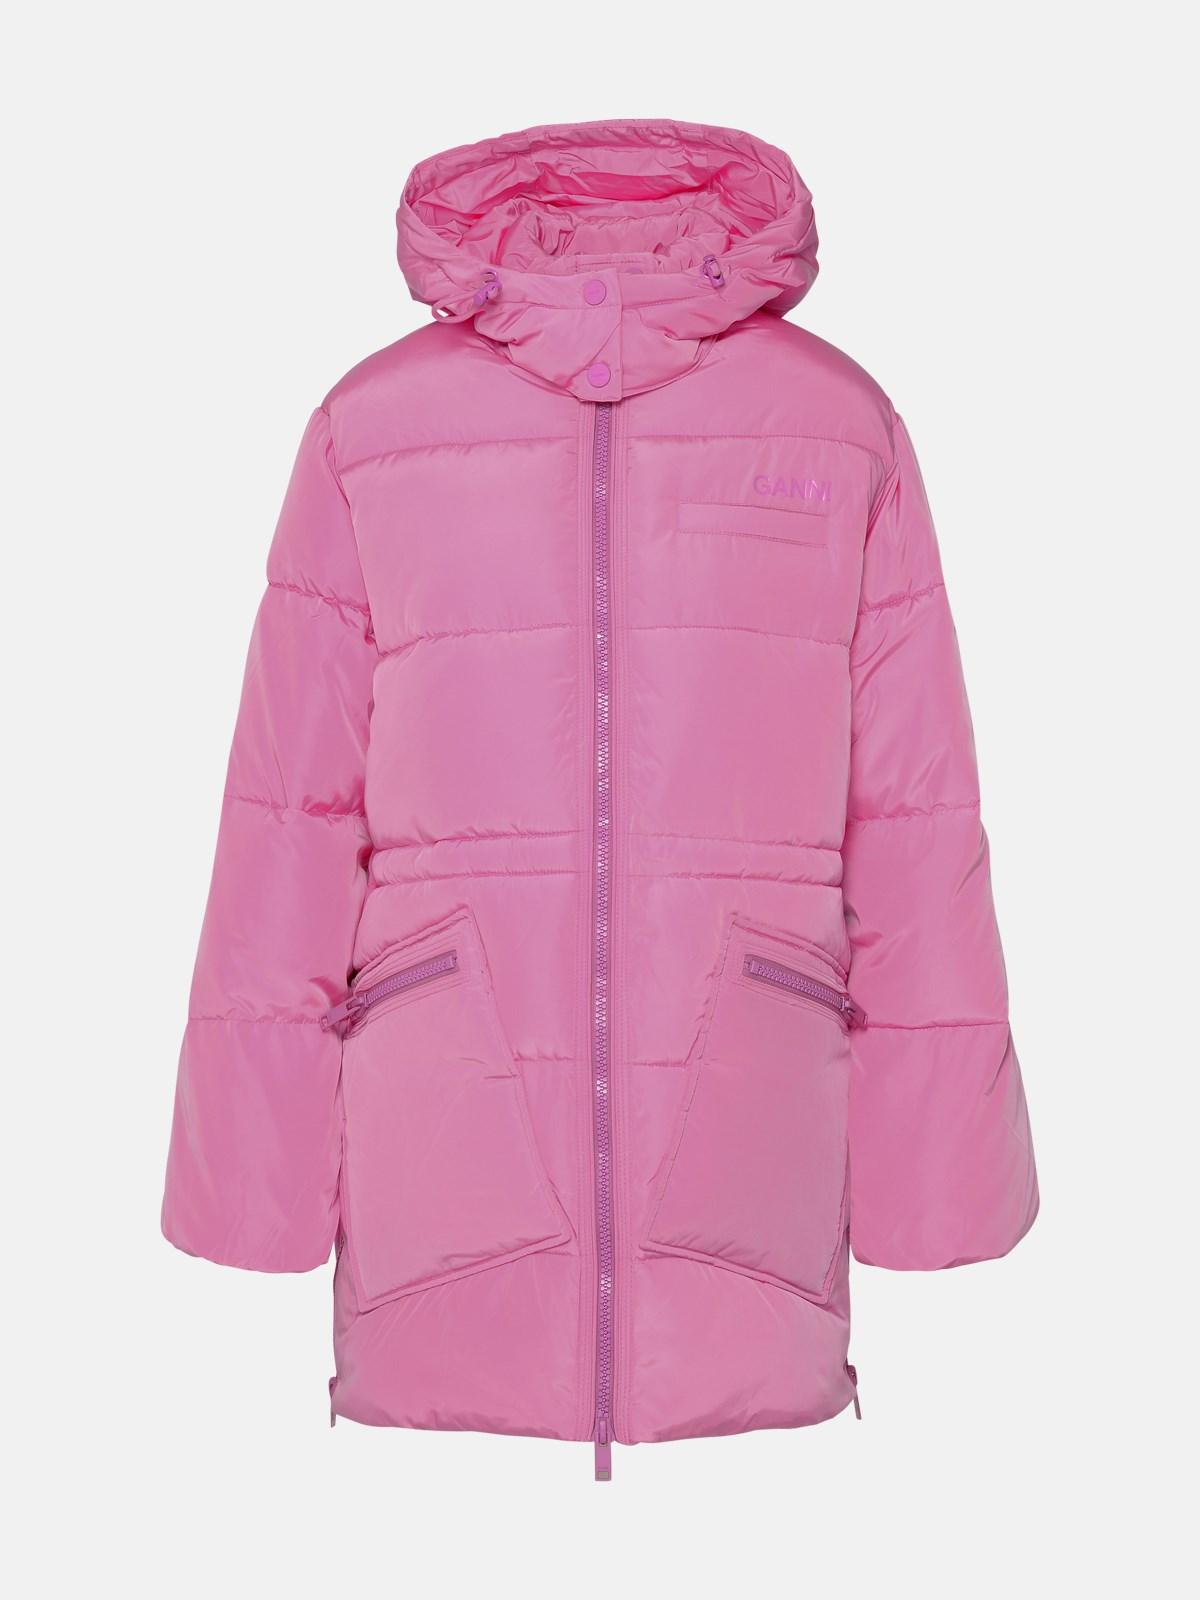 Ganni Rose Nylon Tech Down Jacket in Pink | Lyst